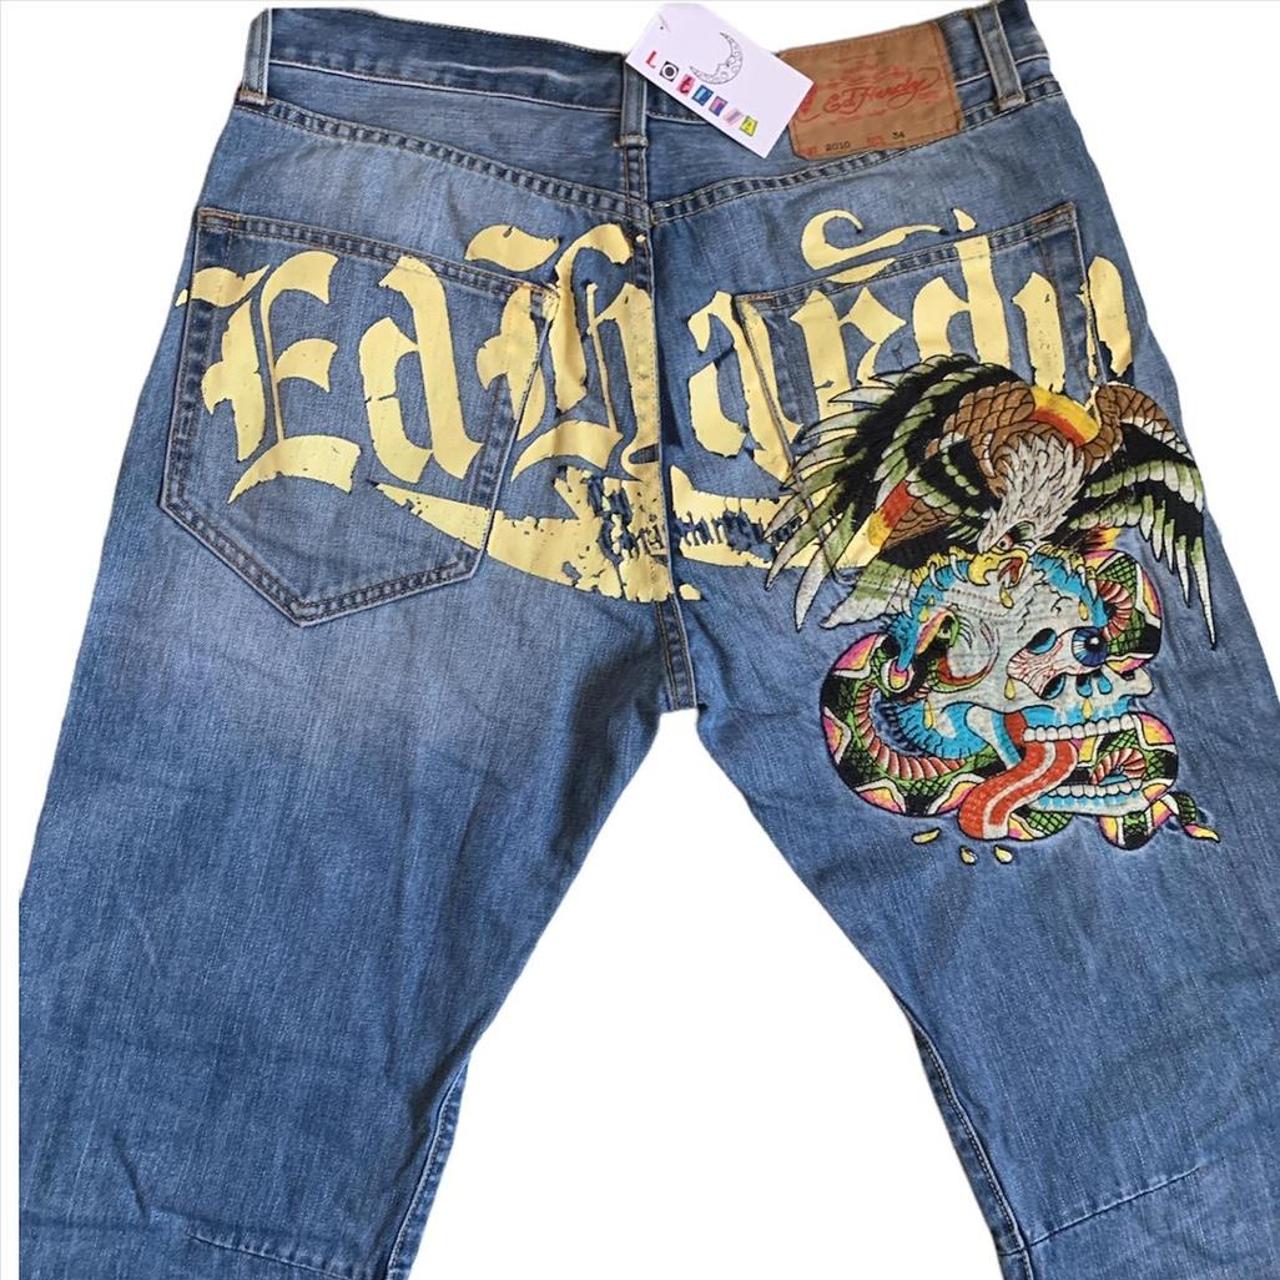 Vintage Ed Hardy Spellout Jeans Size:34x34 Jeans... - Depop